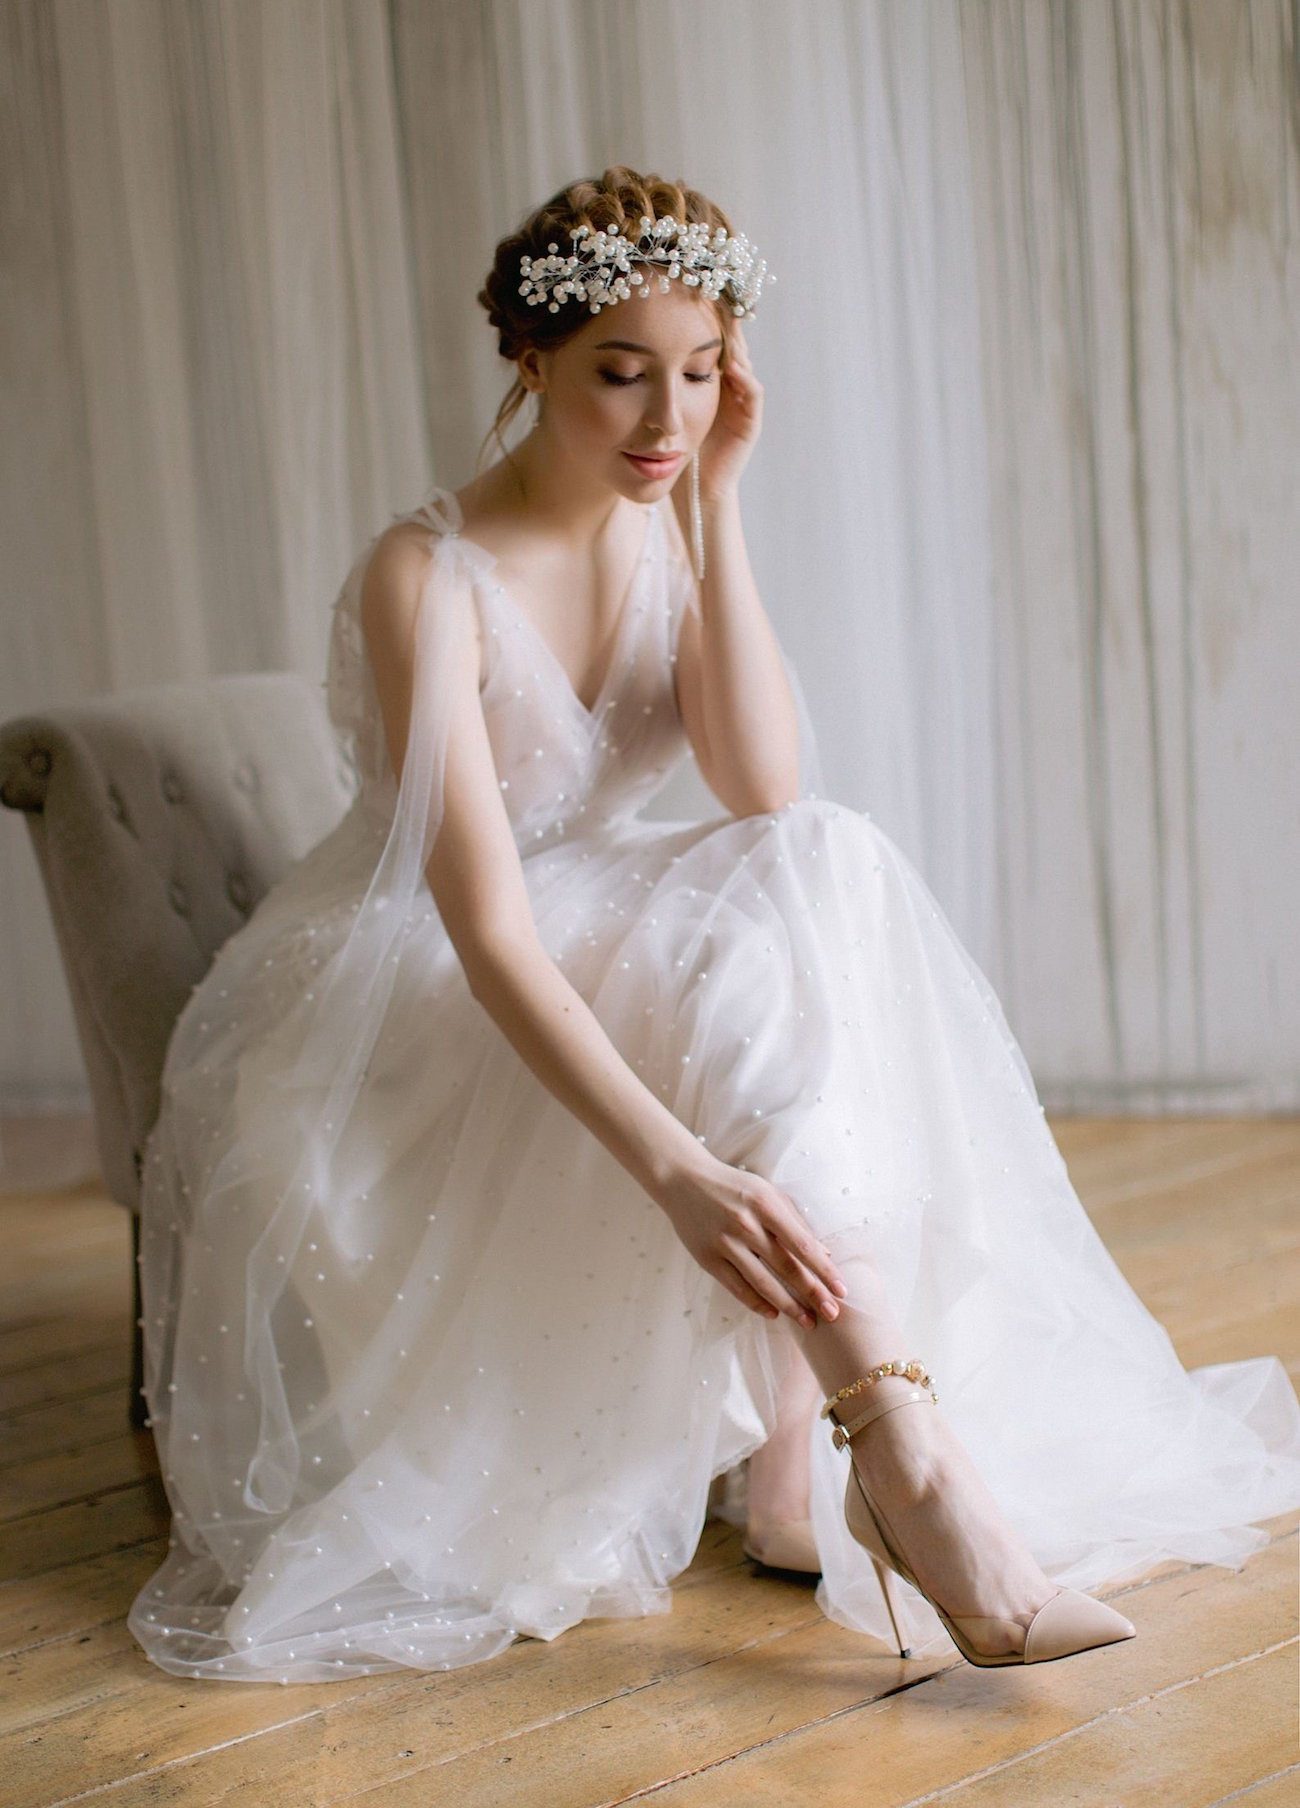 princess ballgown wedding dresses from Etsy